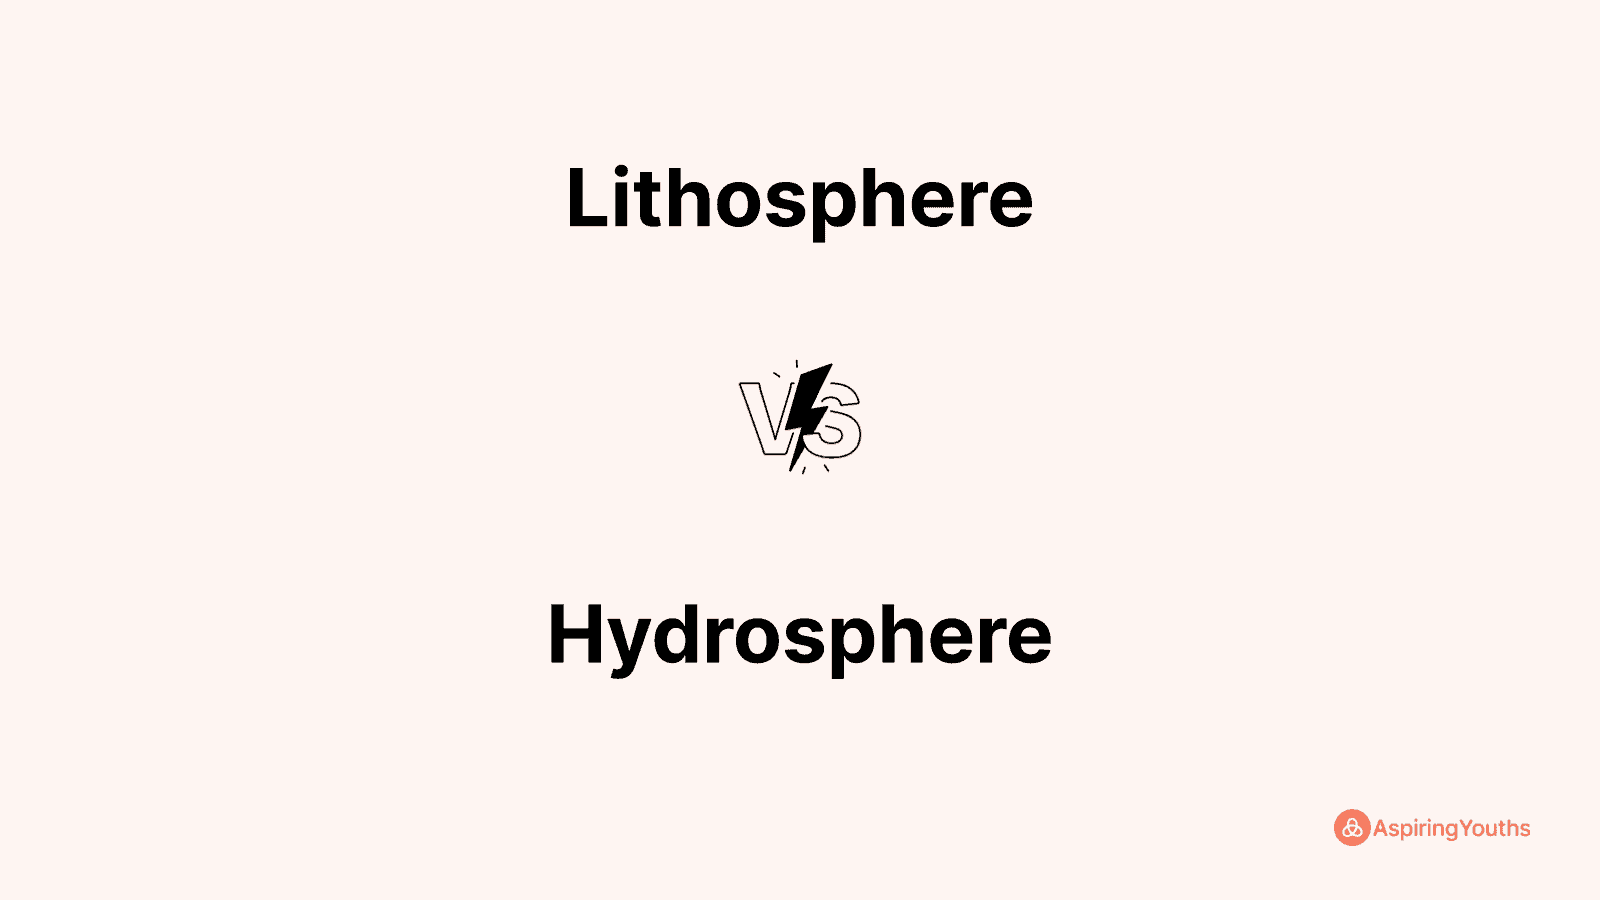 Lithosphere vs Hydrosphere